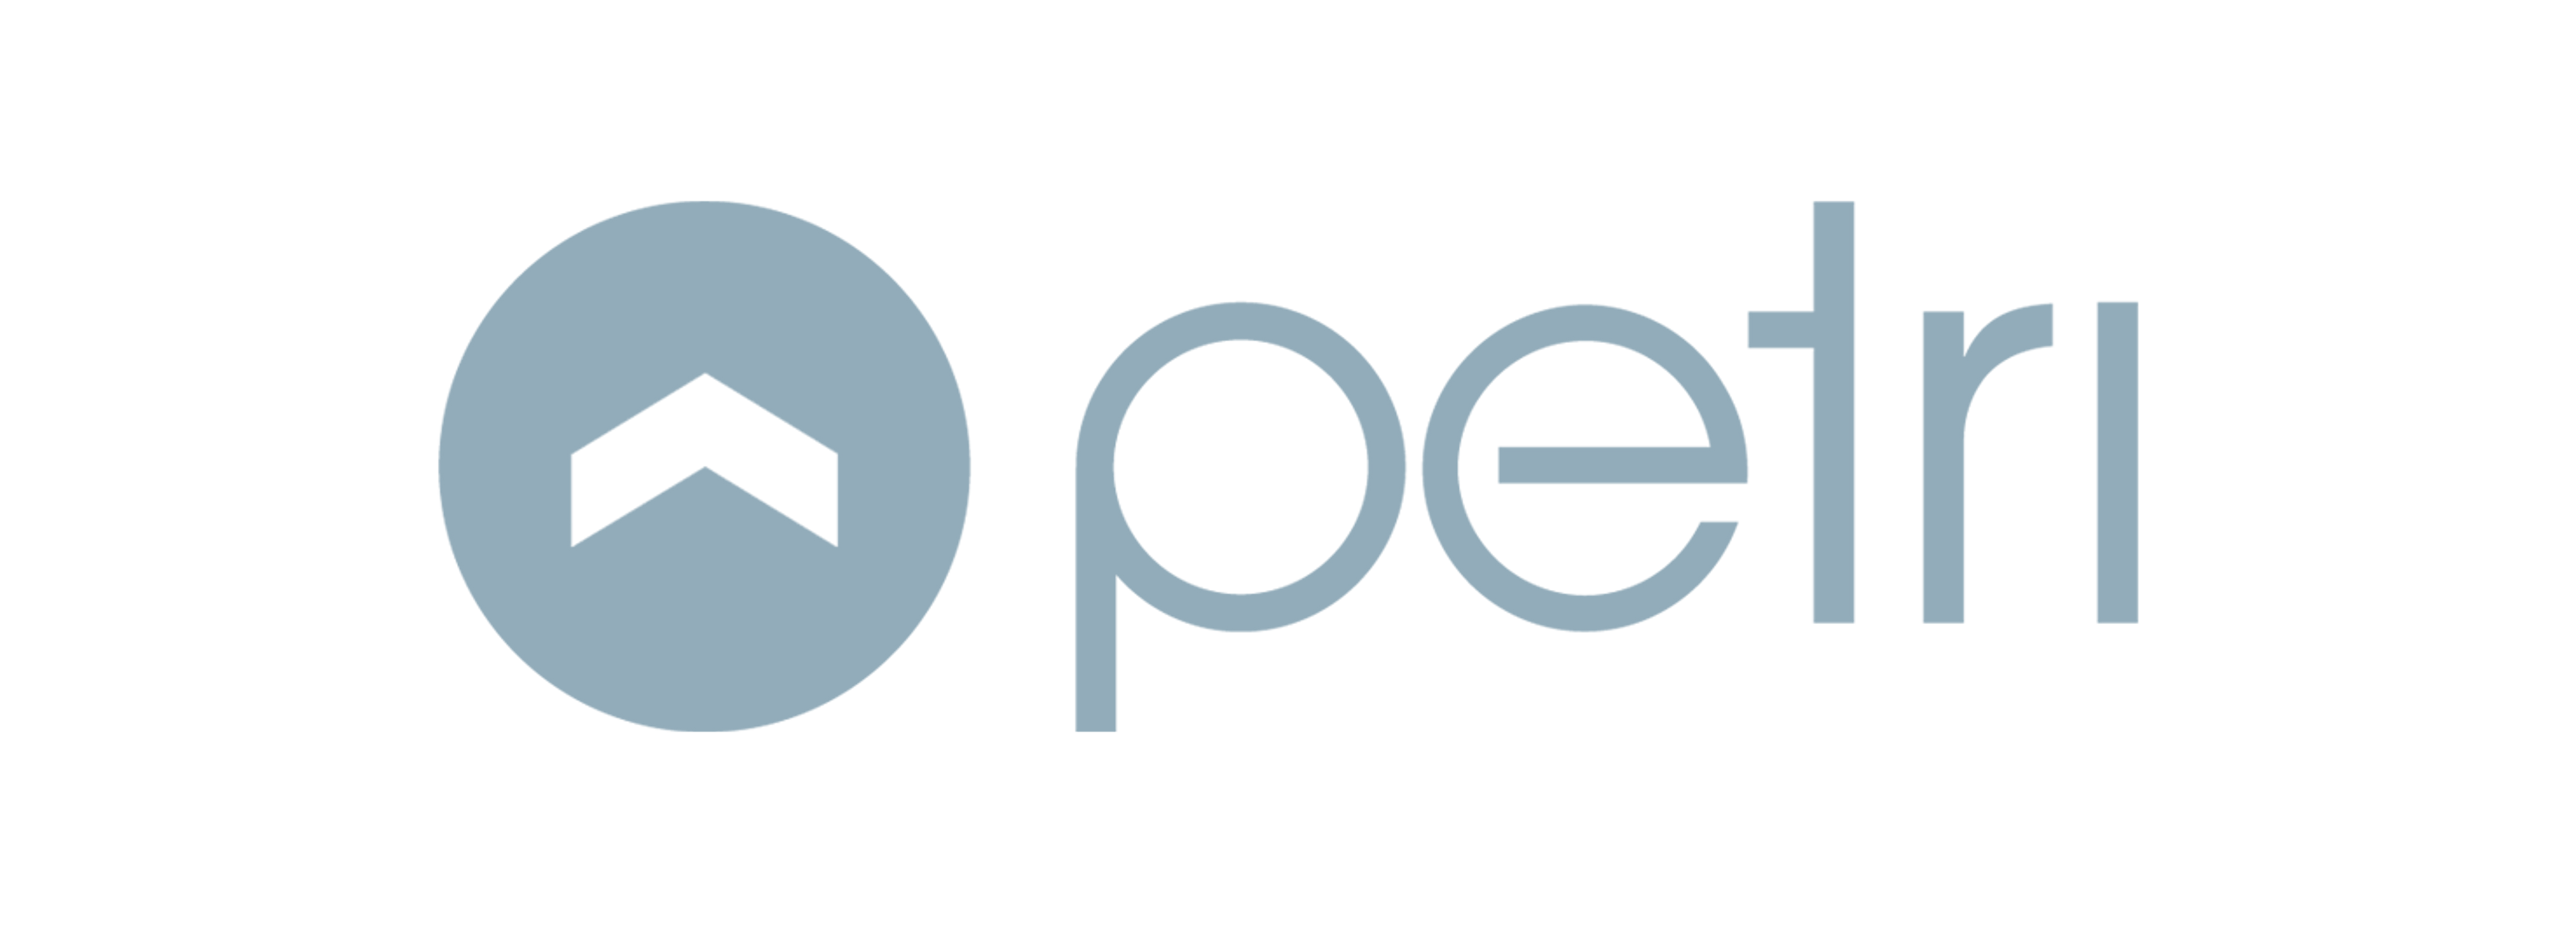 Petri Bio